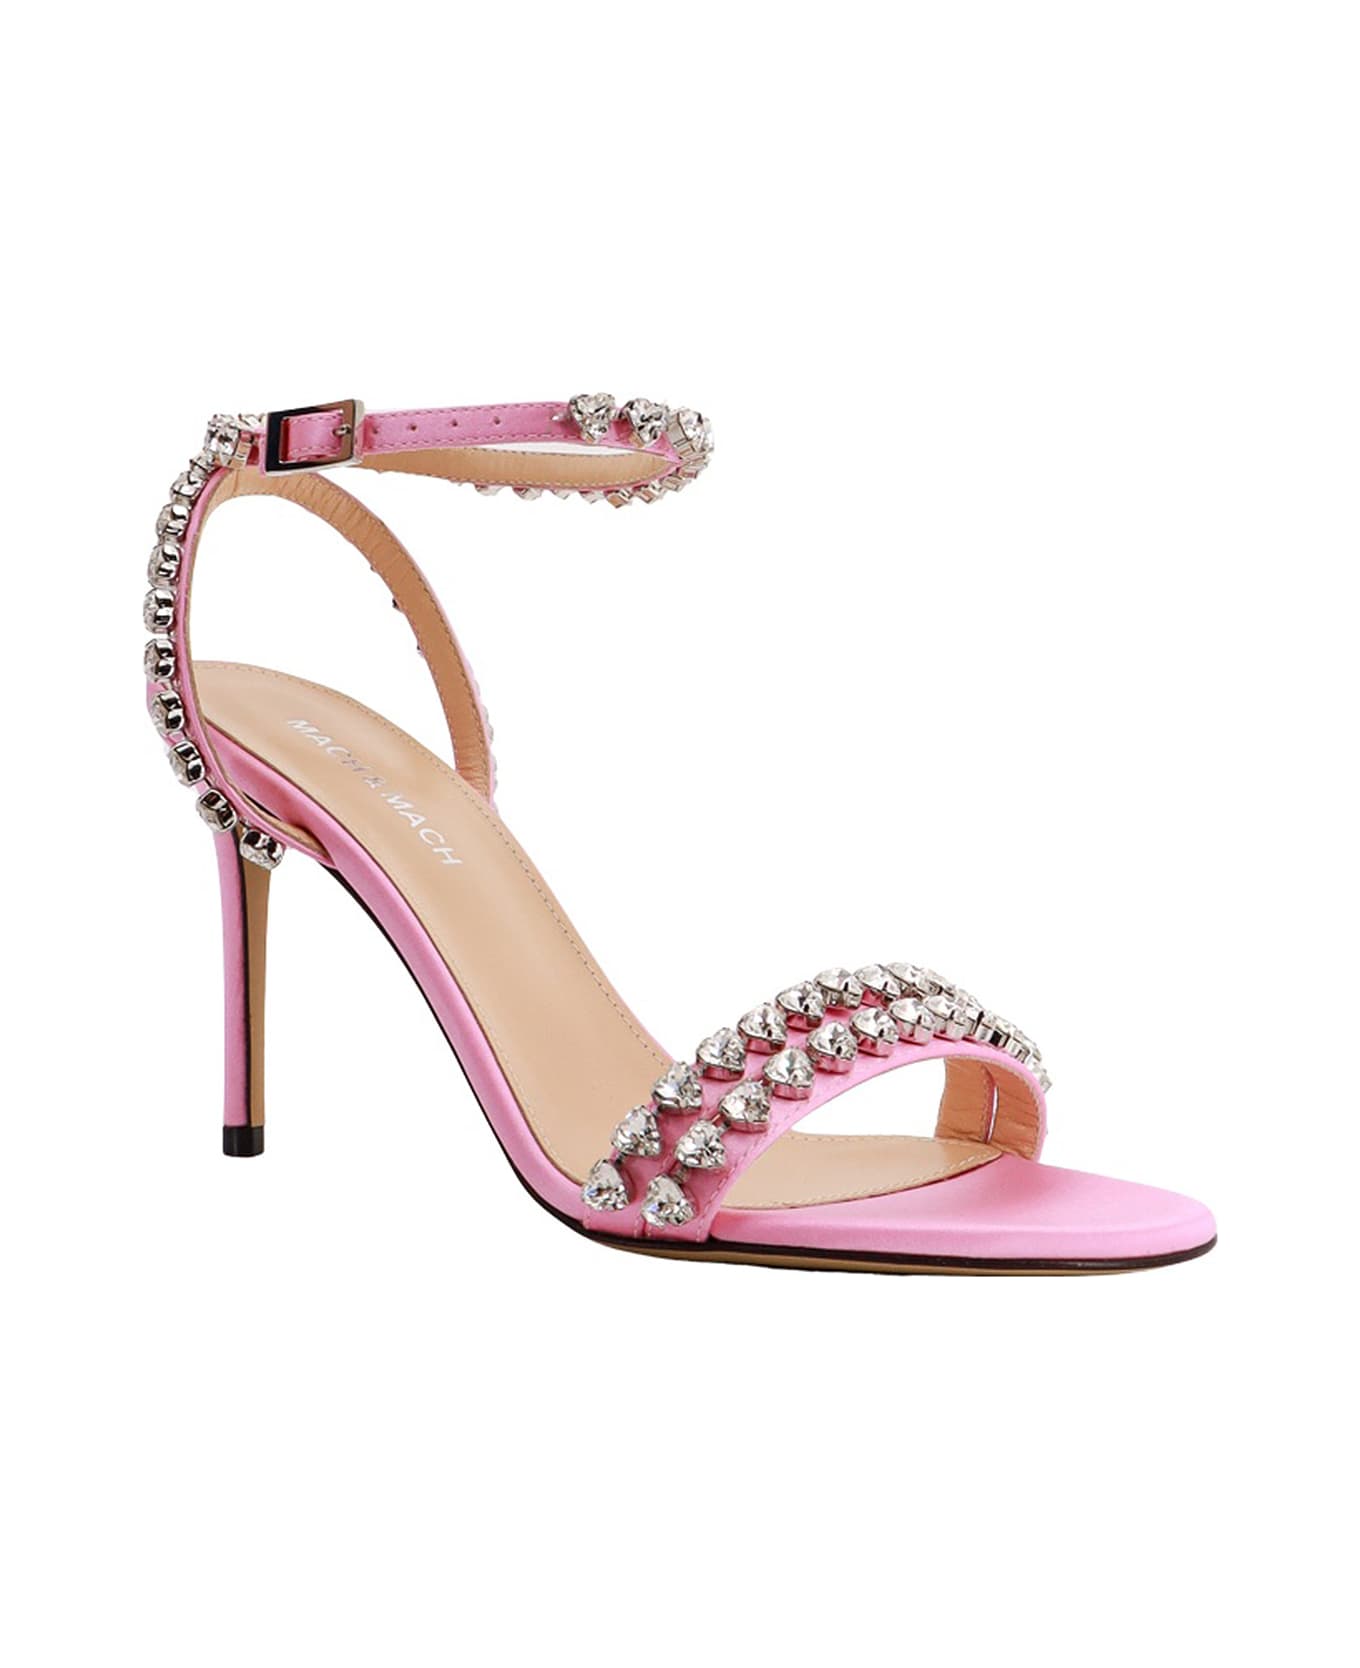 Mach & Mach Sandals - Pink サンダル